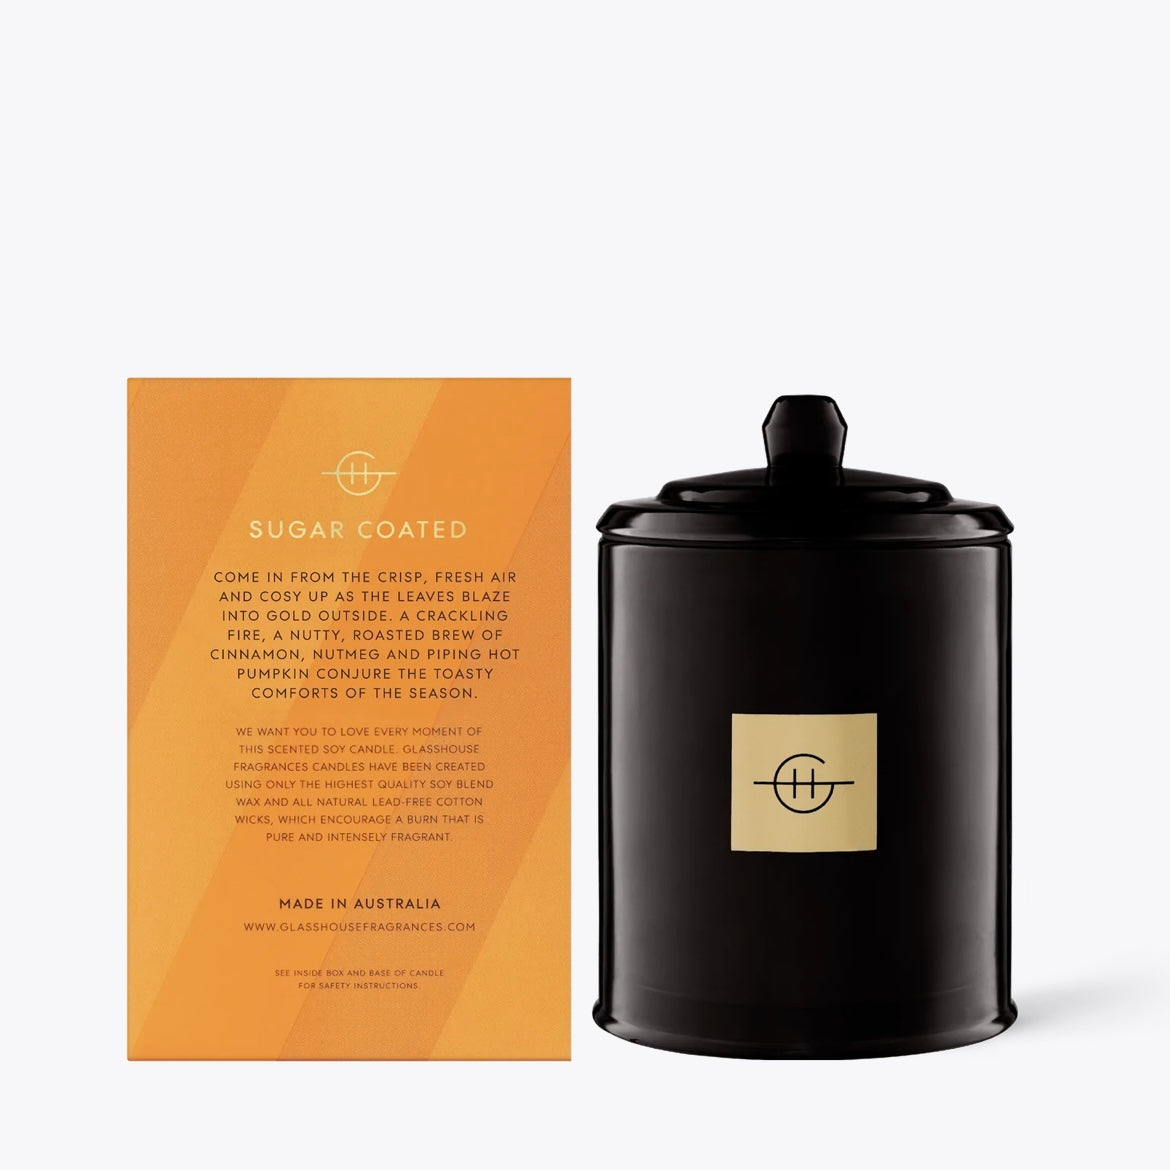 Glasshouse Fragrances Triple Scented Soy Candle Jar - 13.4 oz. - In Season, Pumpkin Spiced Cake